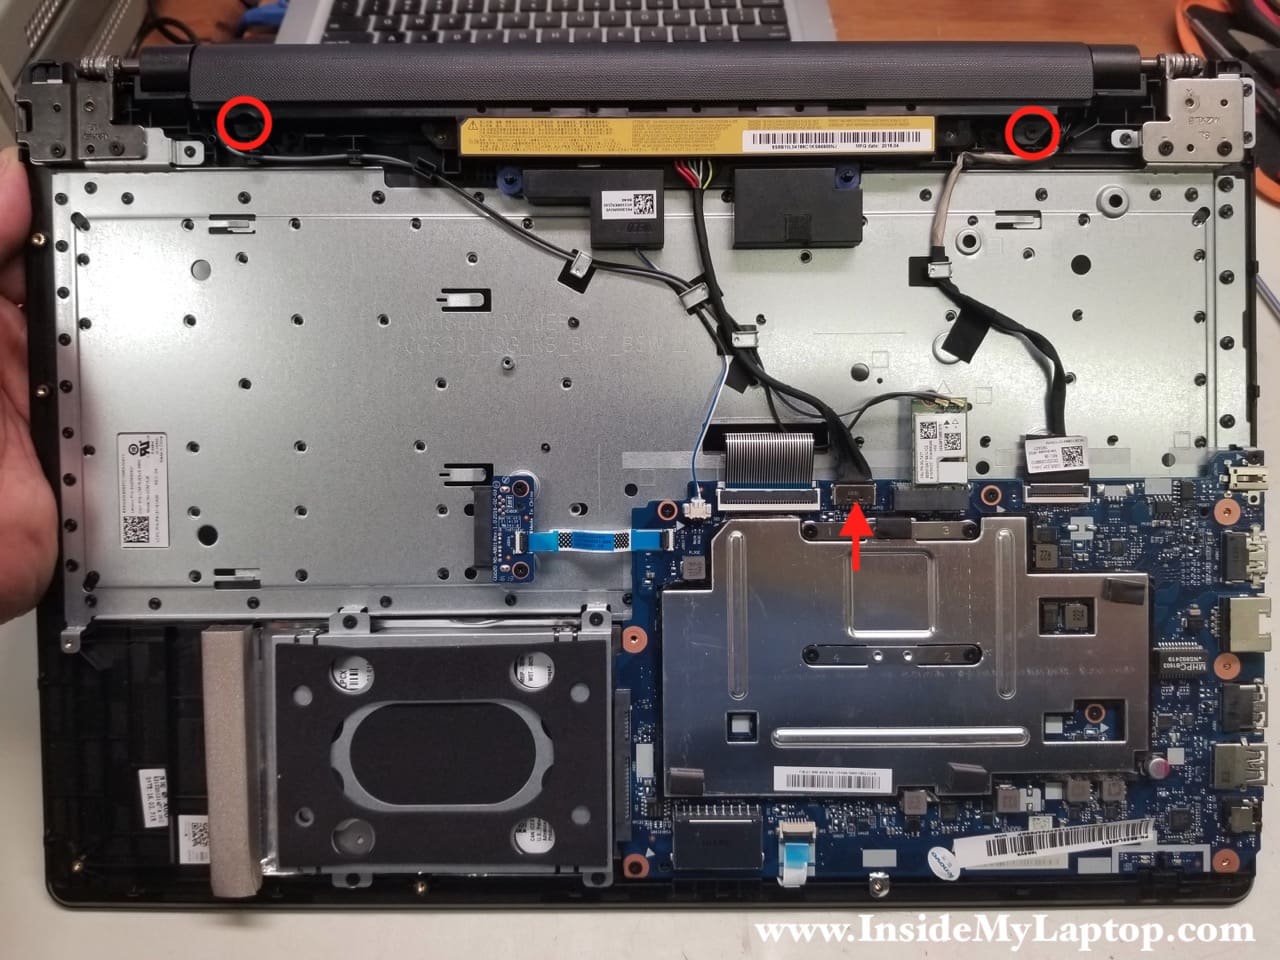 Teardown guide for Lenovo Ideapad 110-15IBR 110-15ACL – Inside my laptop